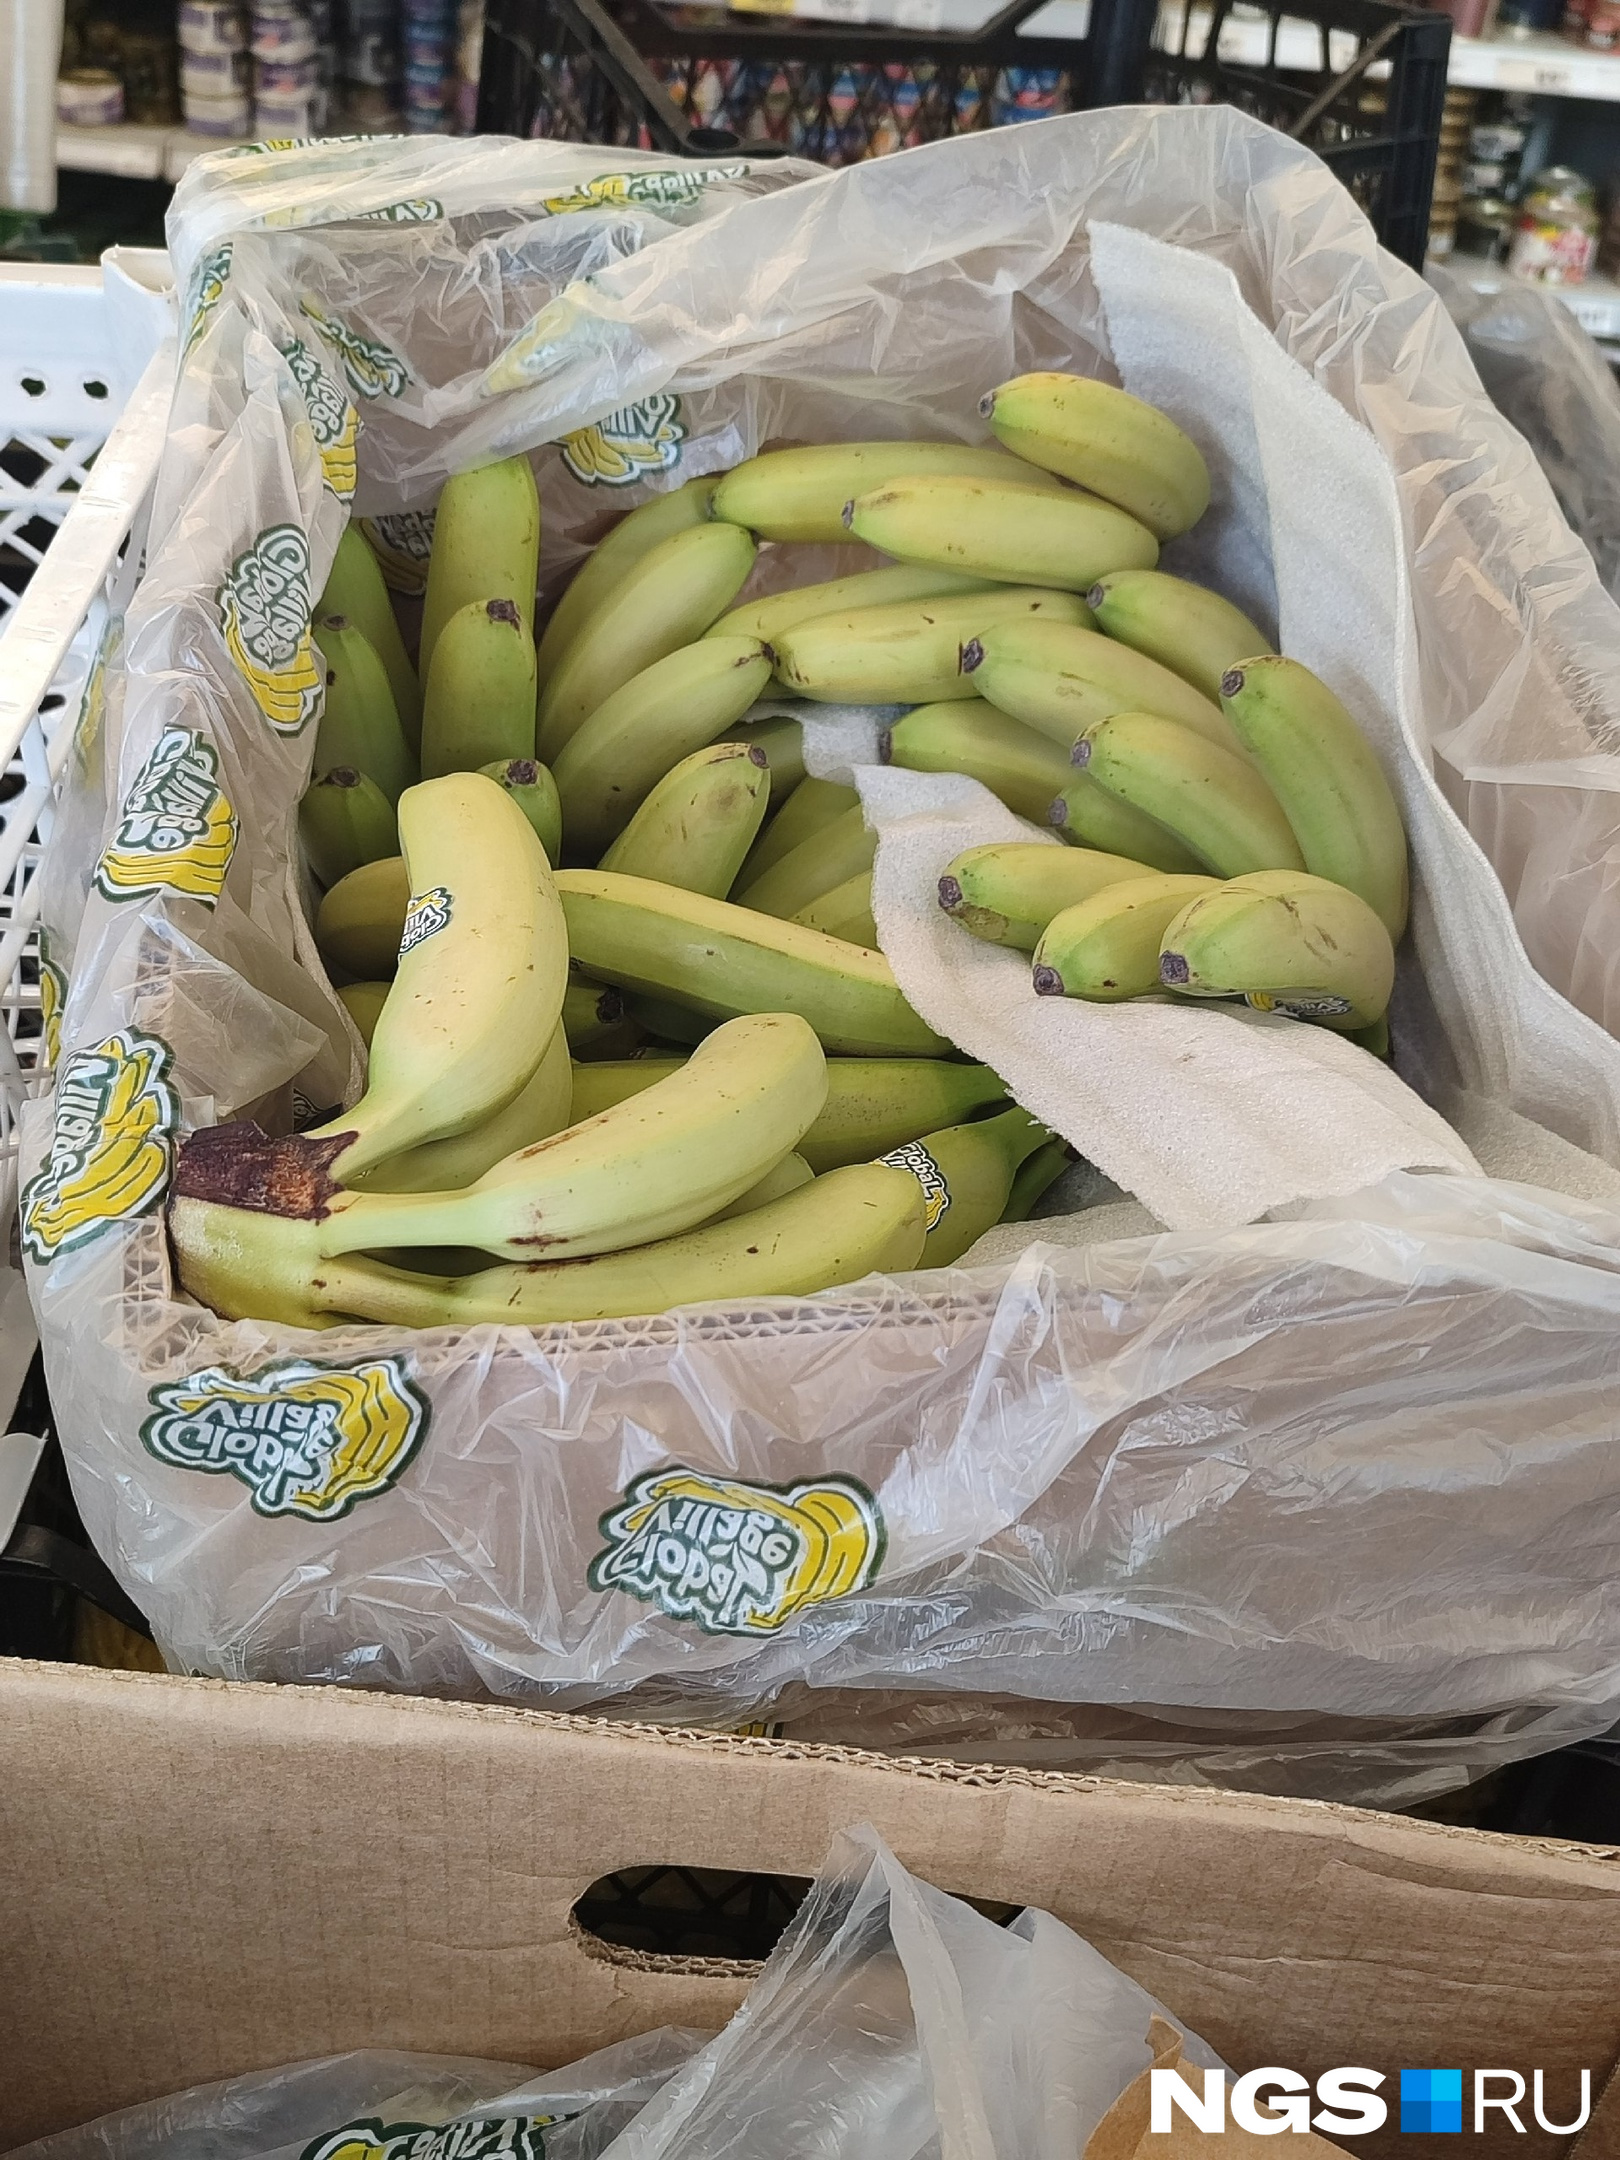 Бананы-малыши стоят больше 250 рублей